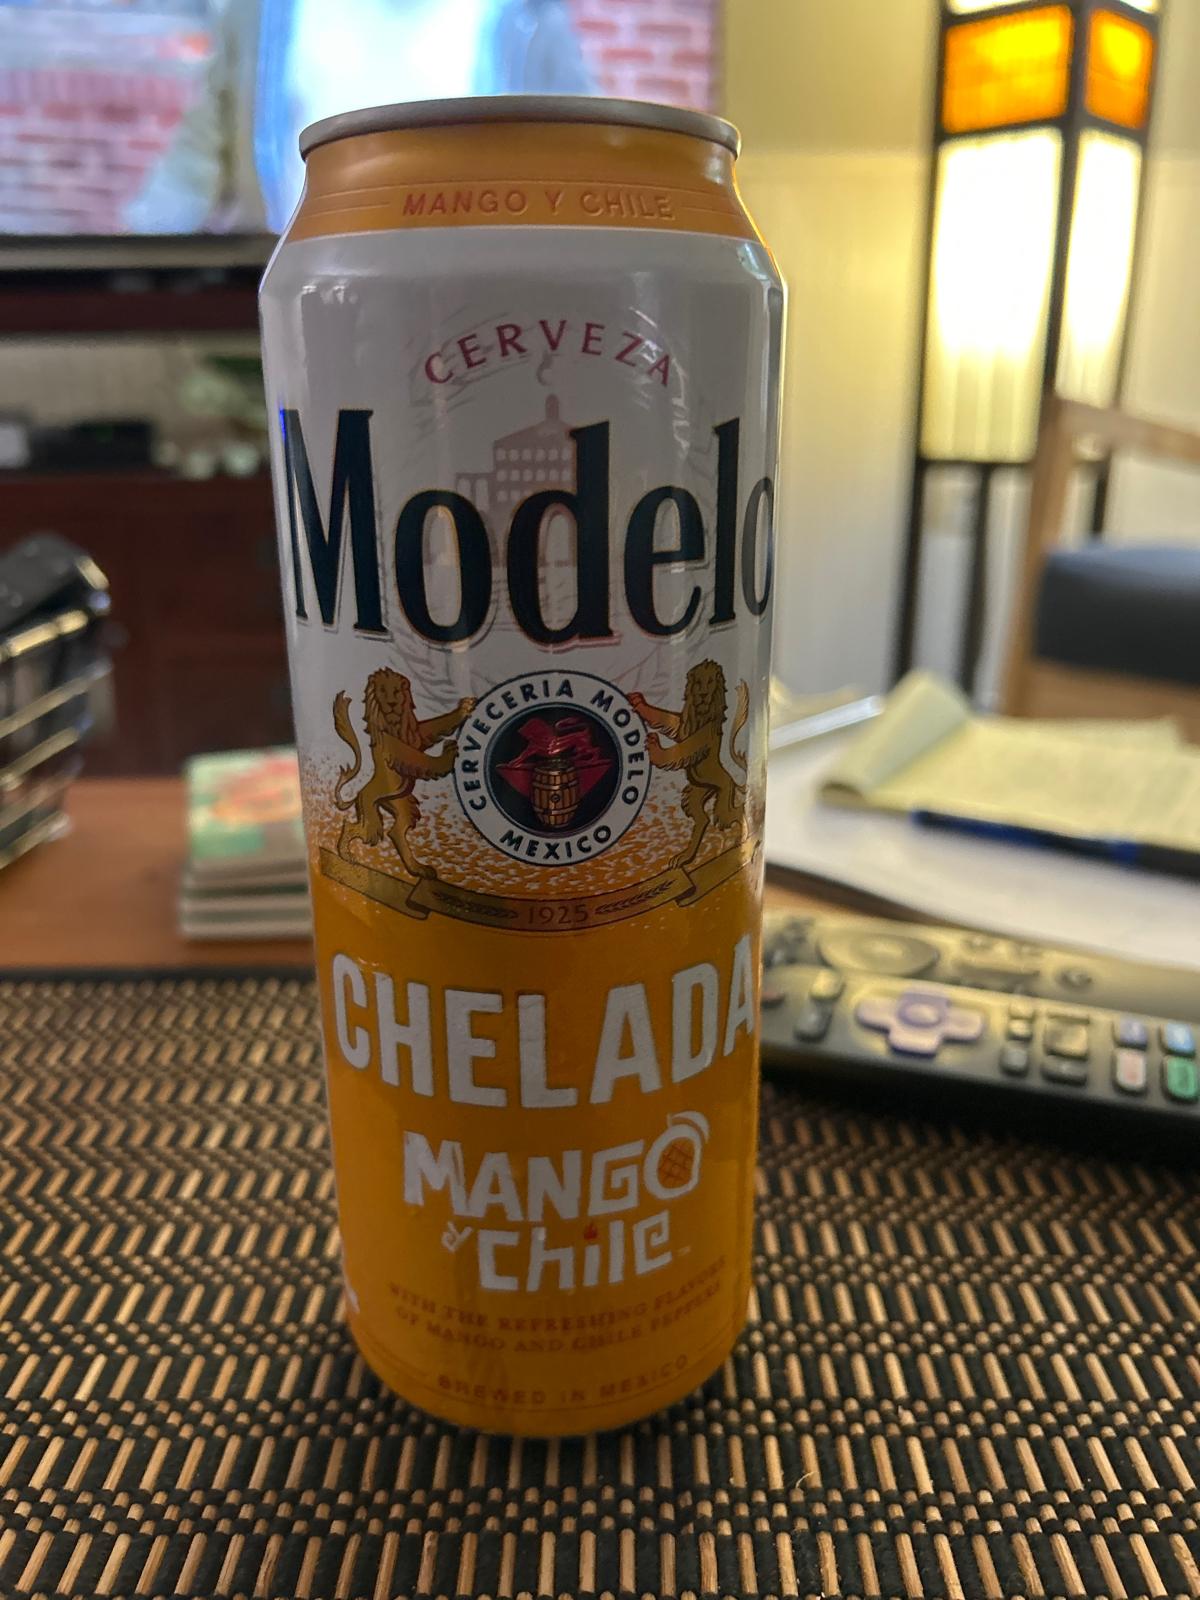 Chelada Mango Chile